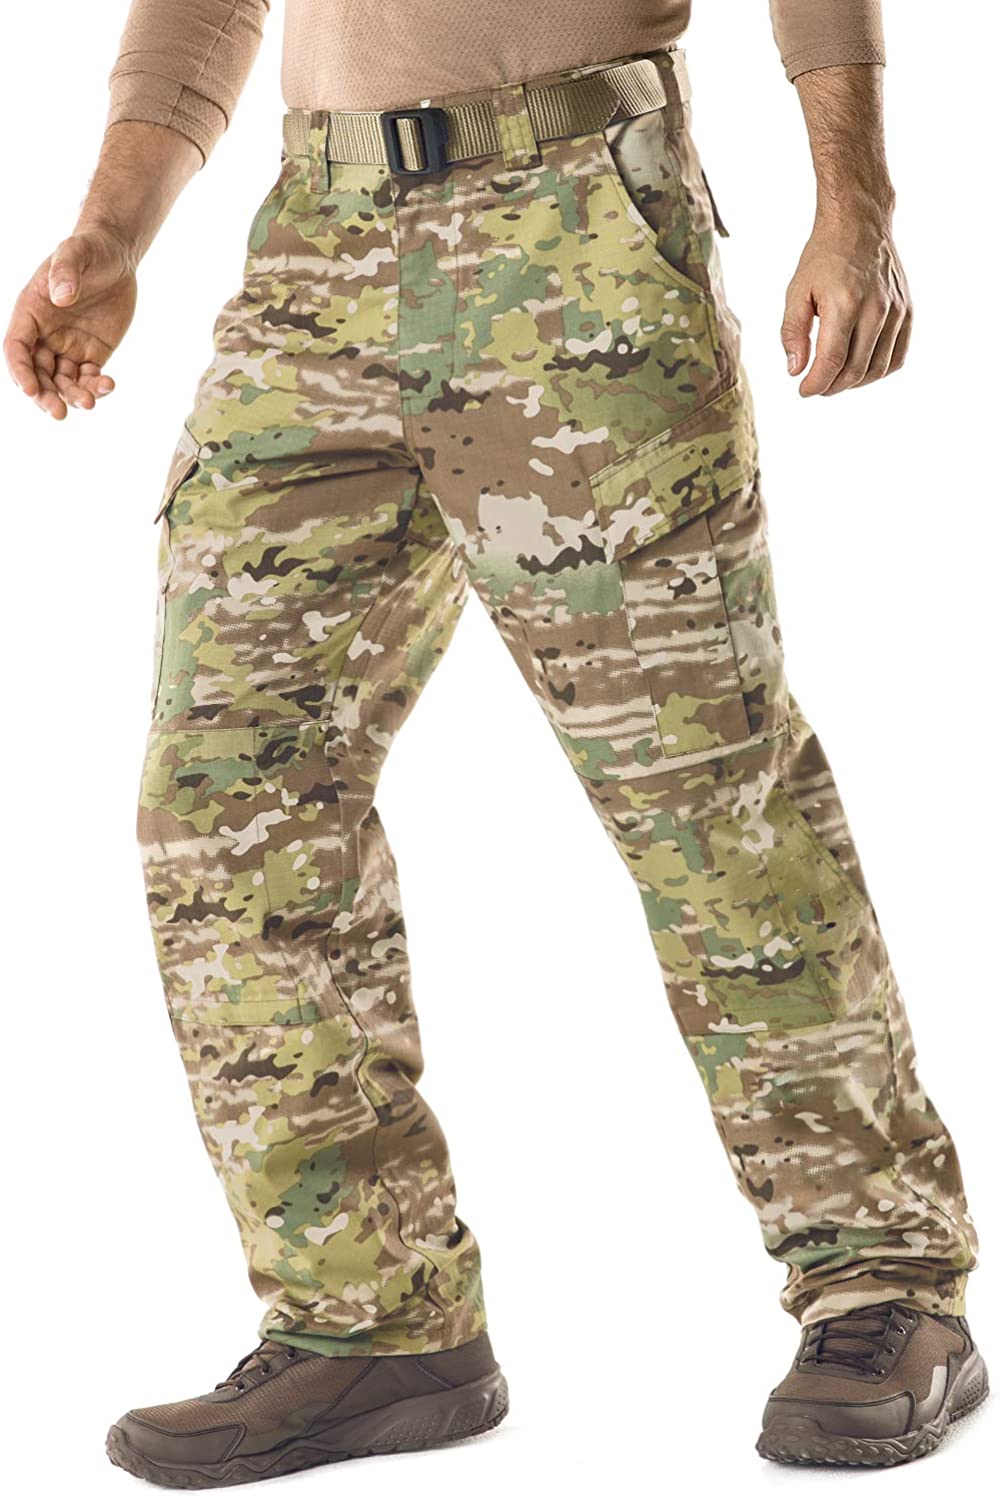 Military Combat BDU/ACU Cargo Pants CQR Mens Tactical Pants Water Repellent Ripstop Work Pants Hiking Outdoor Apparel 